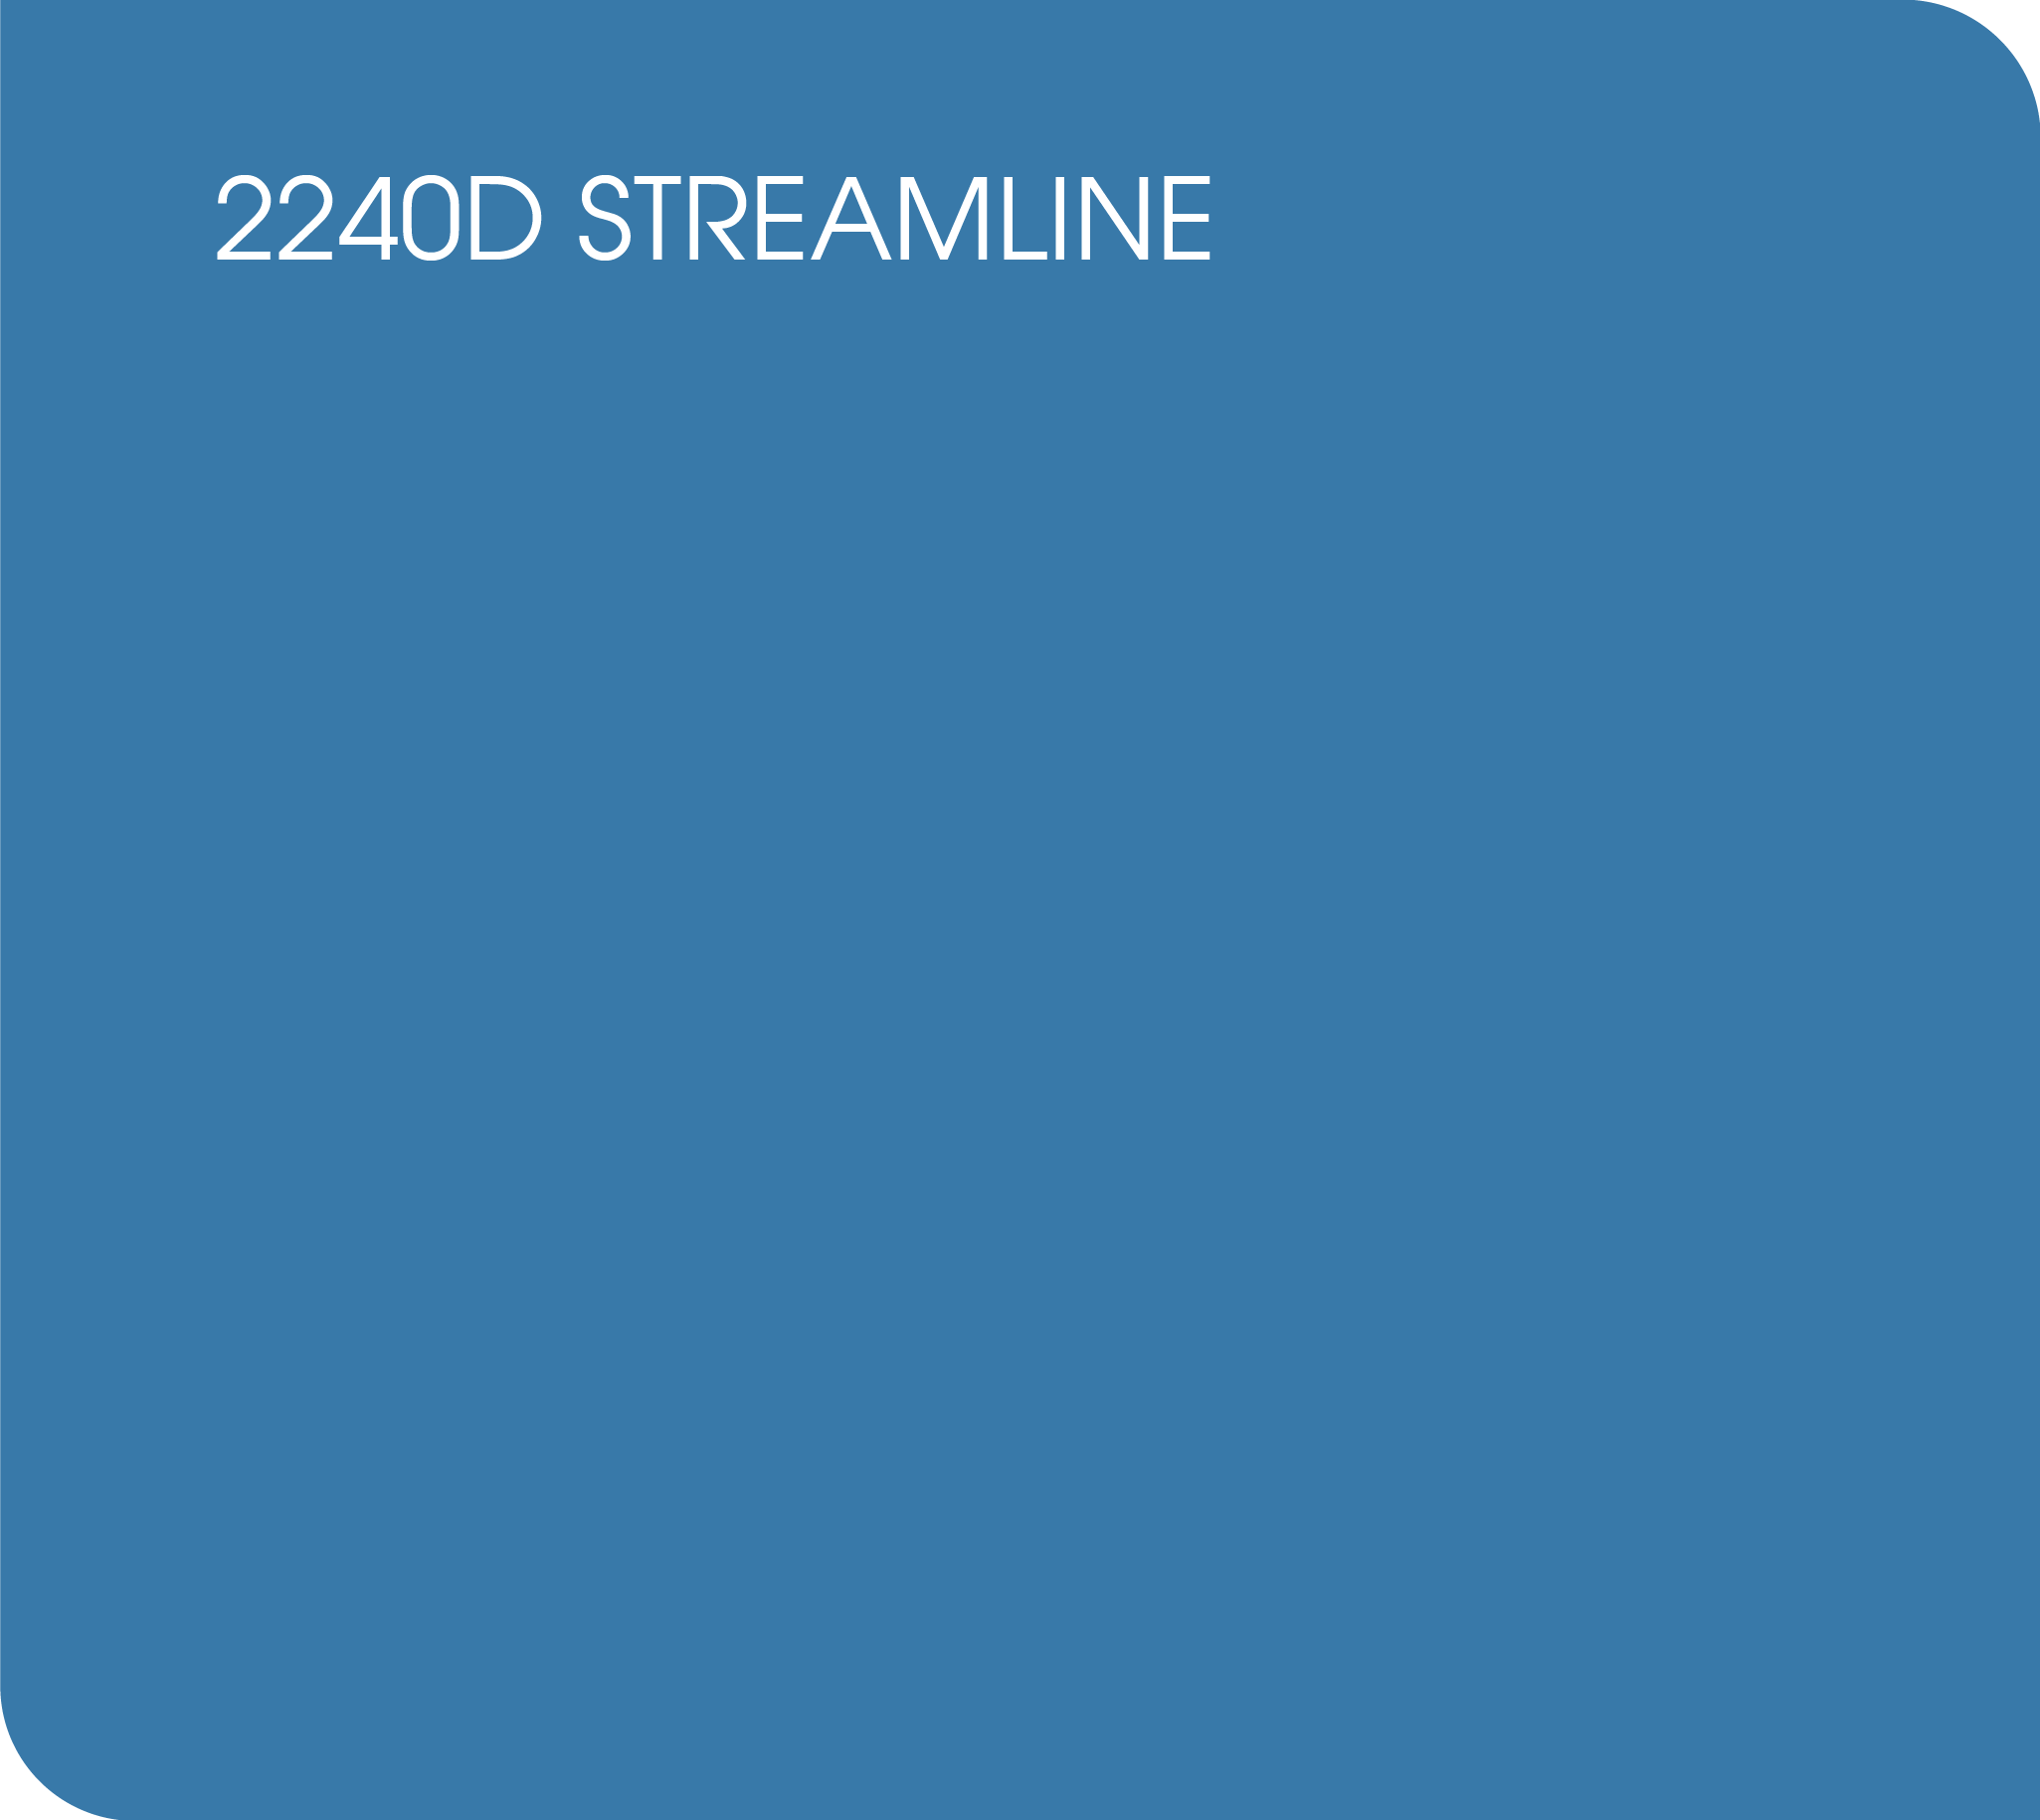 2240D streamline